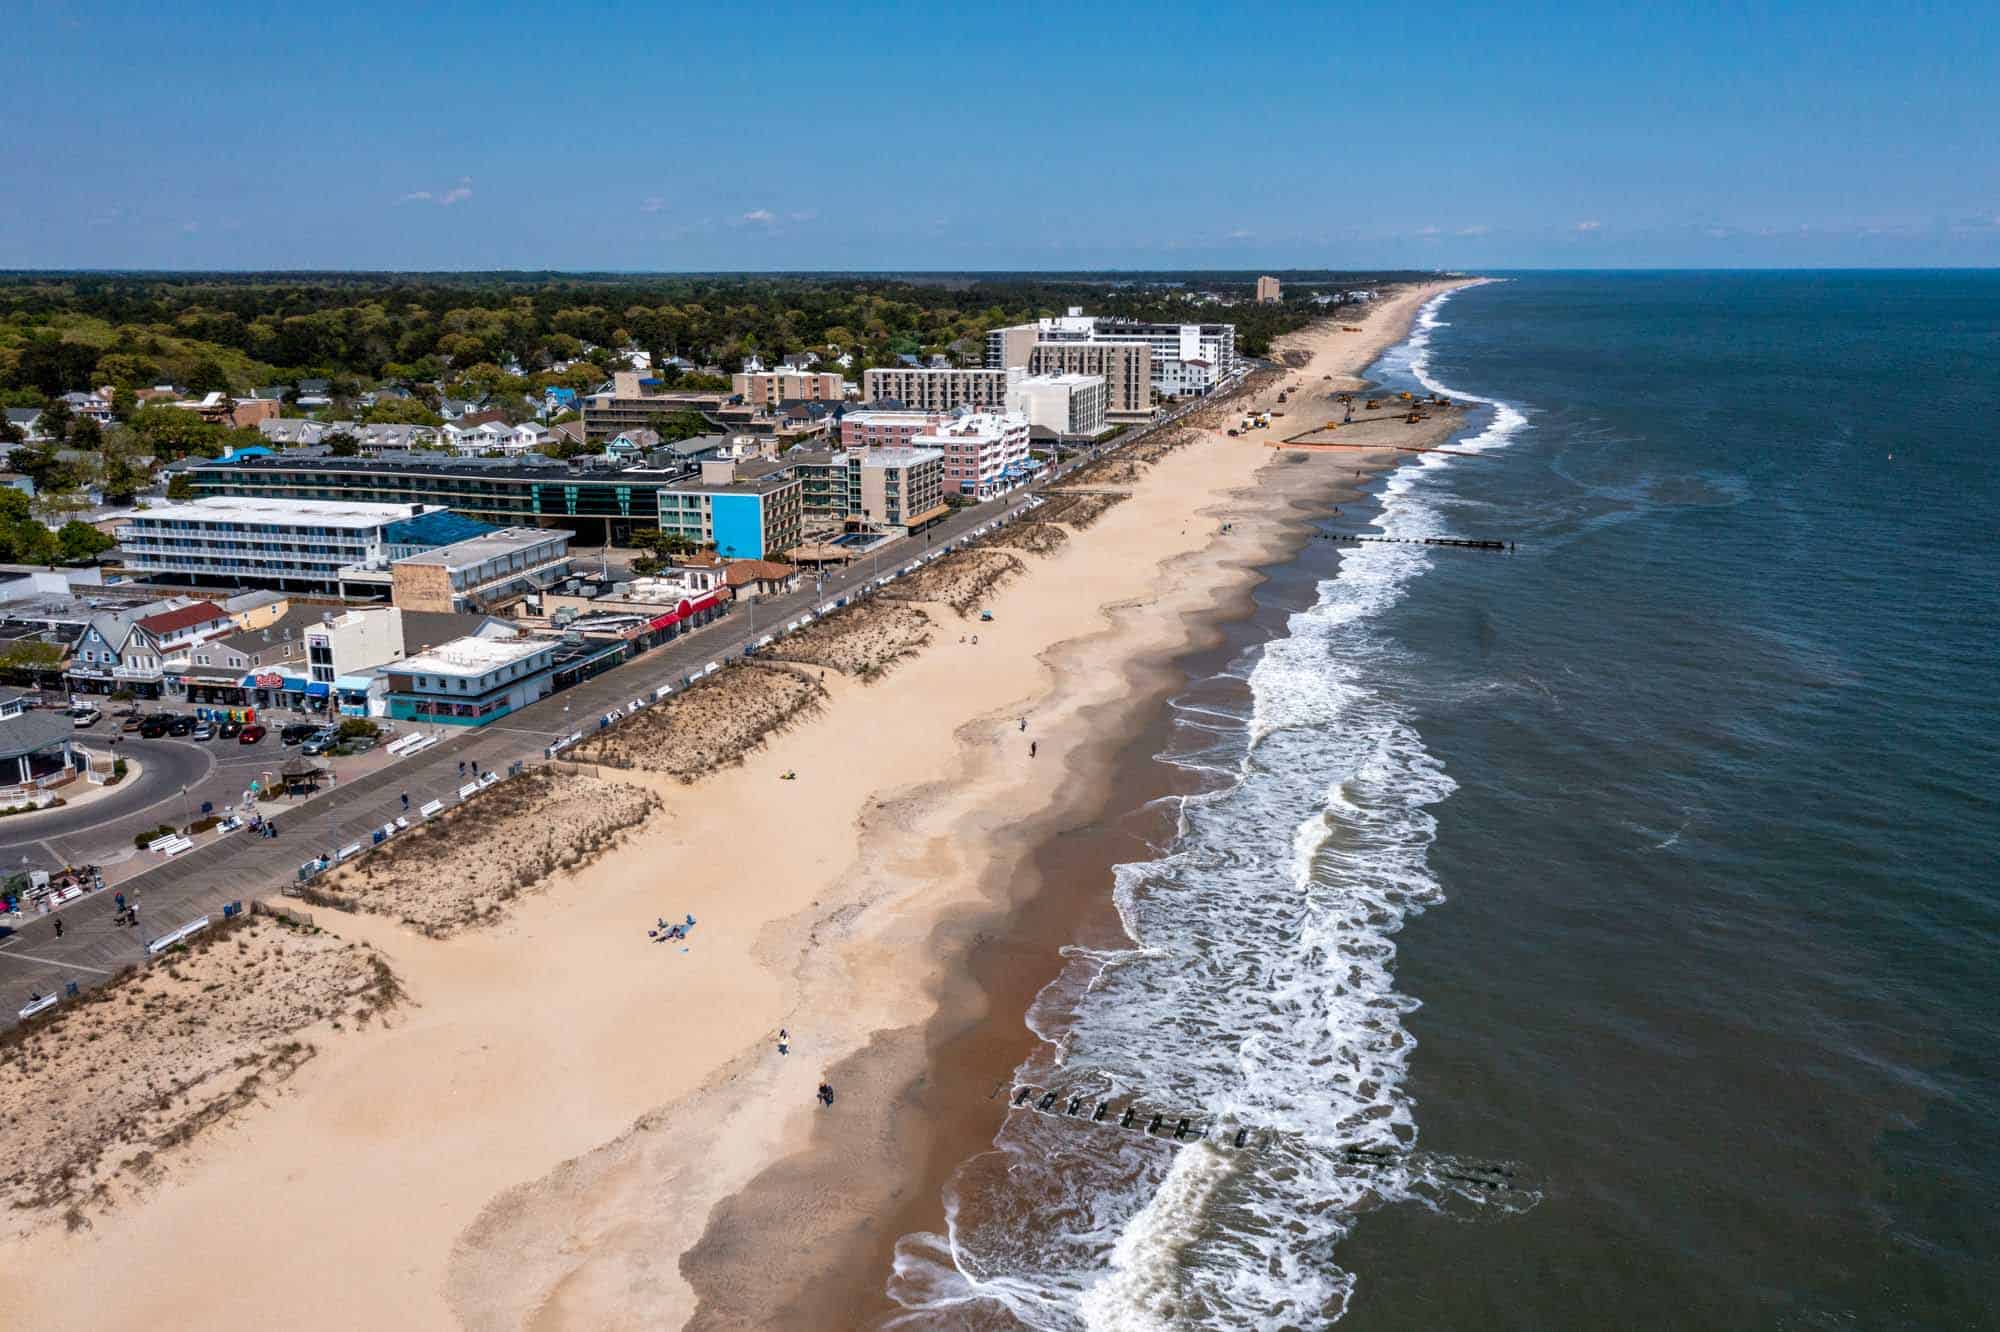 Overhead view of a coastal town, beach, and ocean